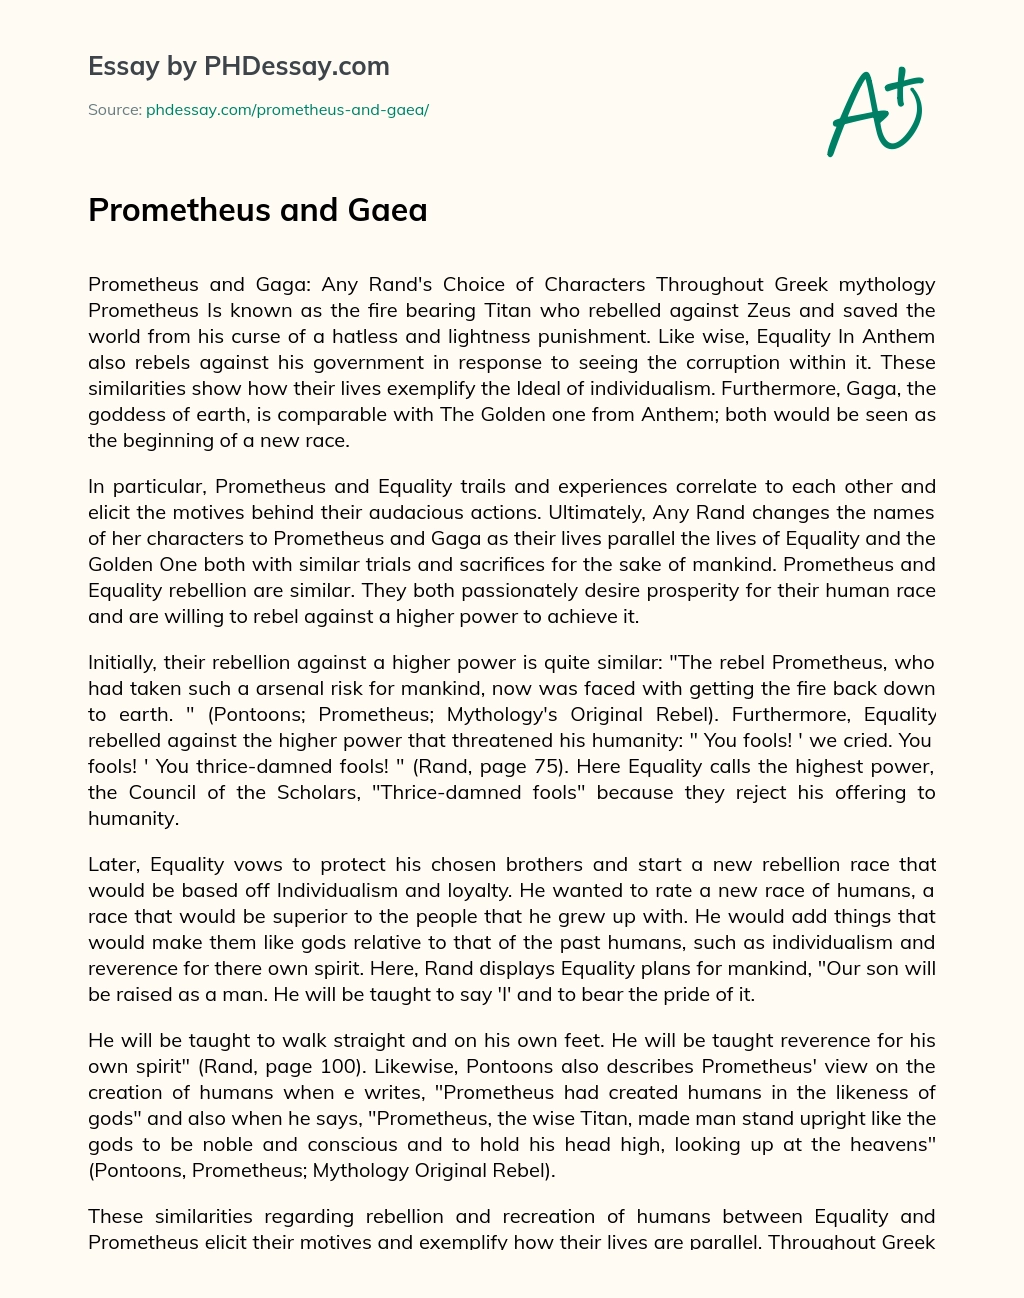 Prometheus and Gaea essay